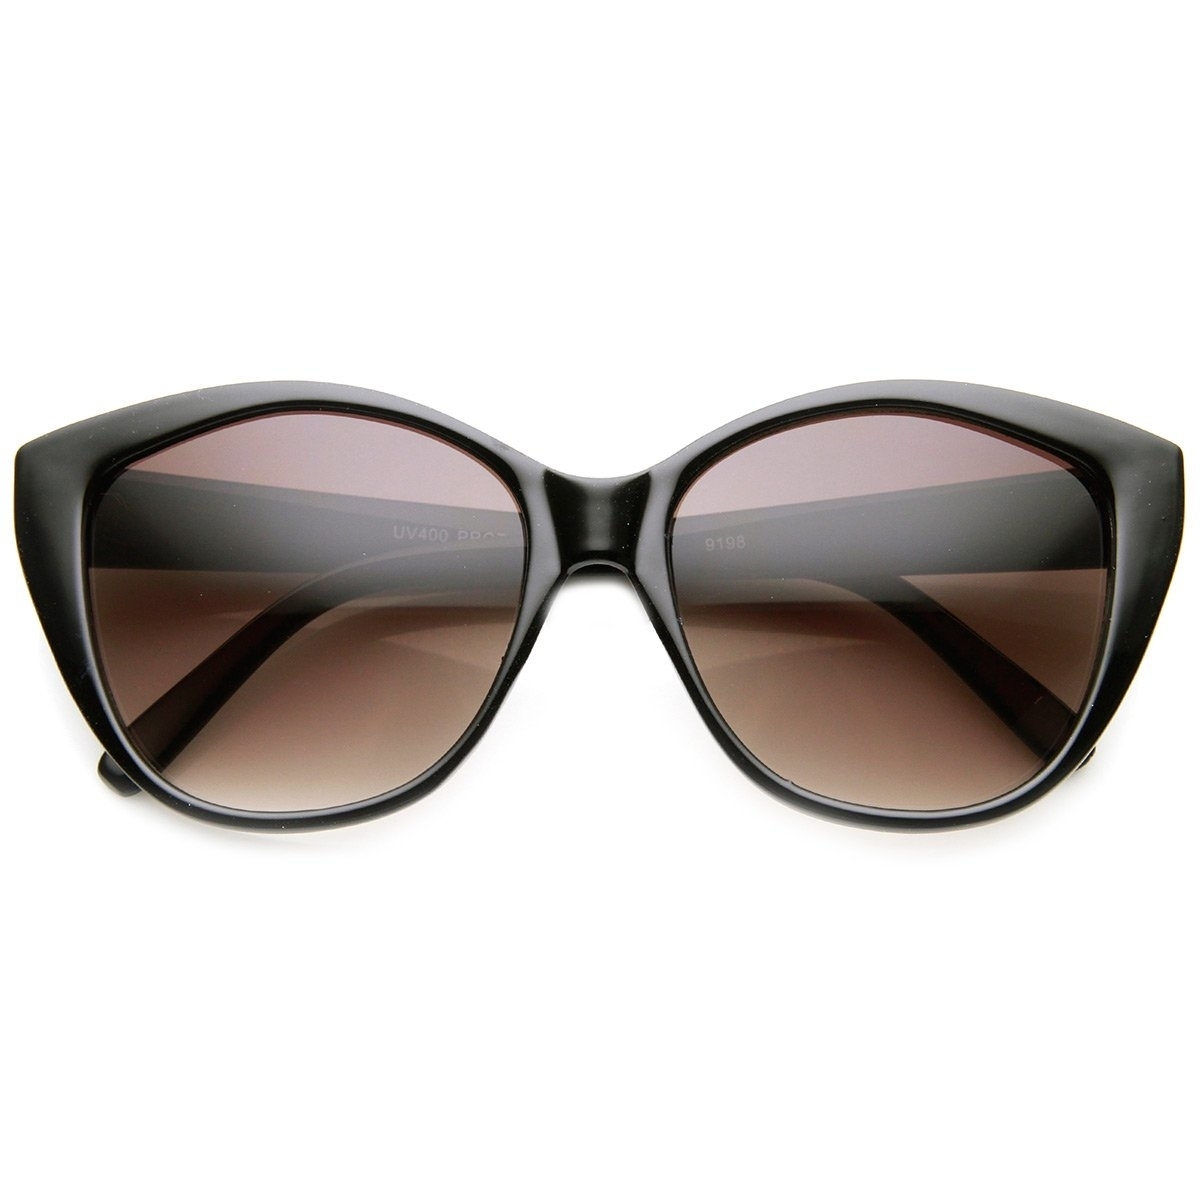 Womens Oversized Oval Mod Glam High Fashion Sunglasses - Tortoise